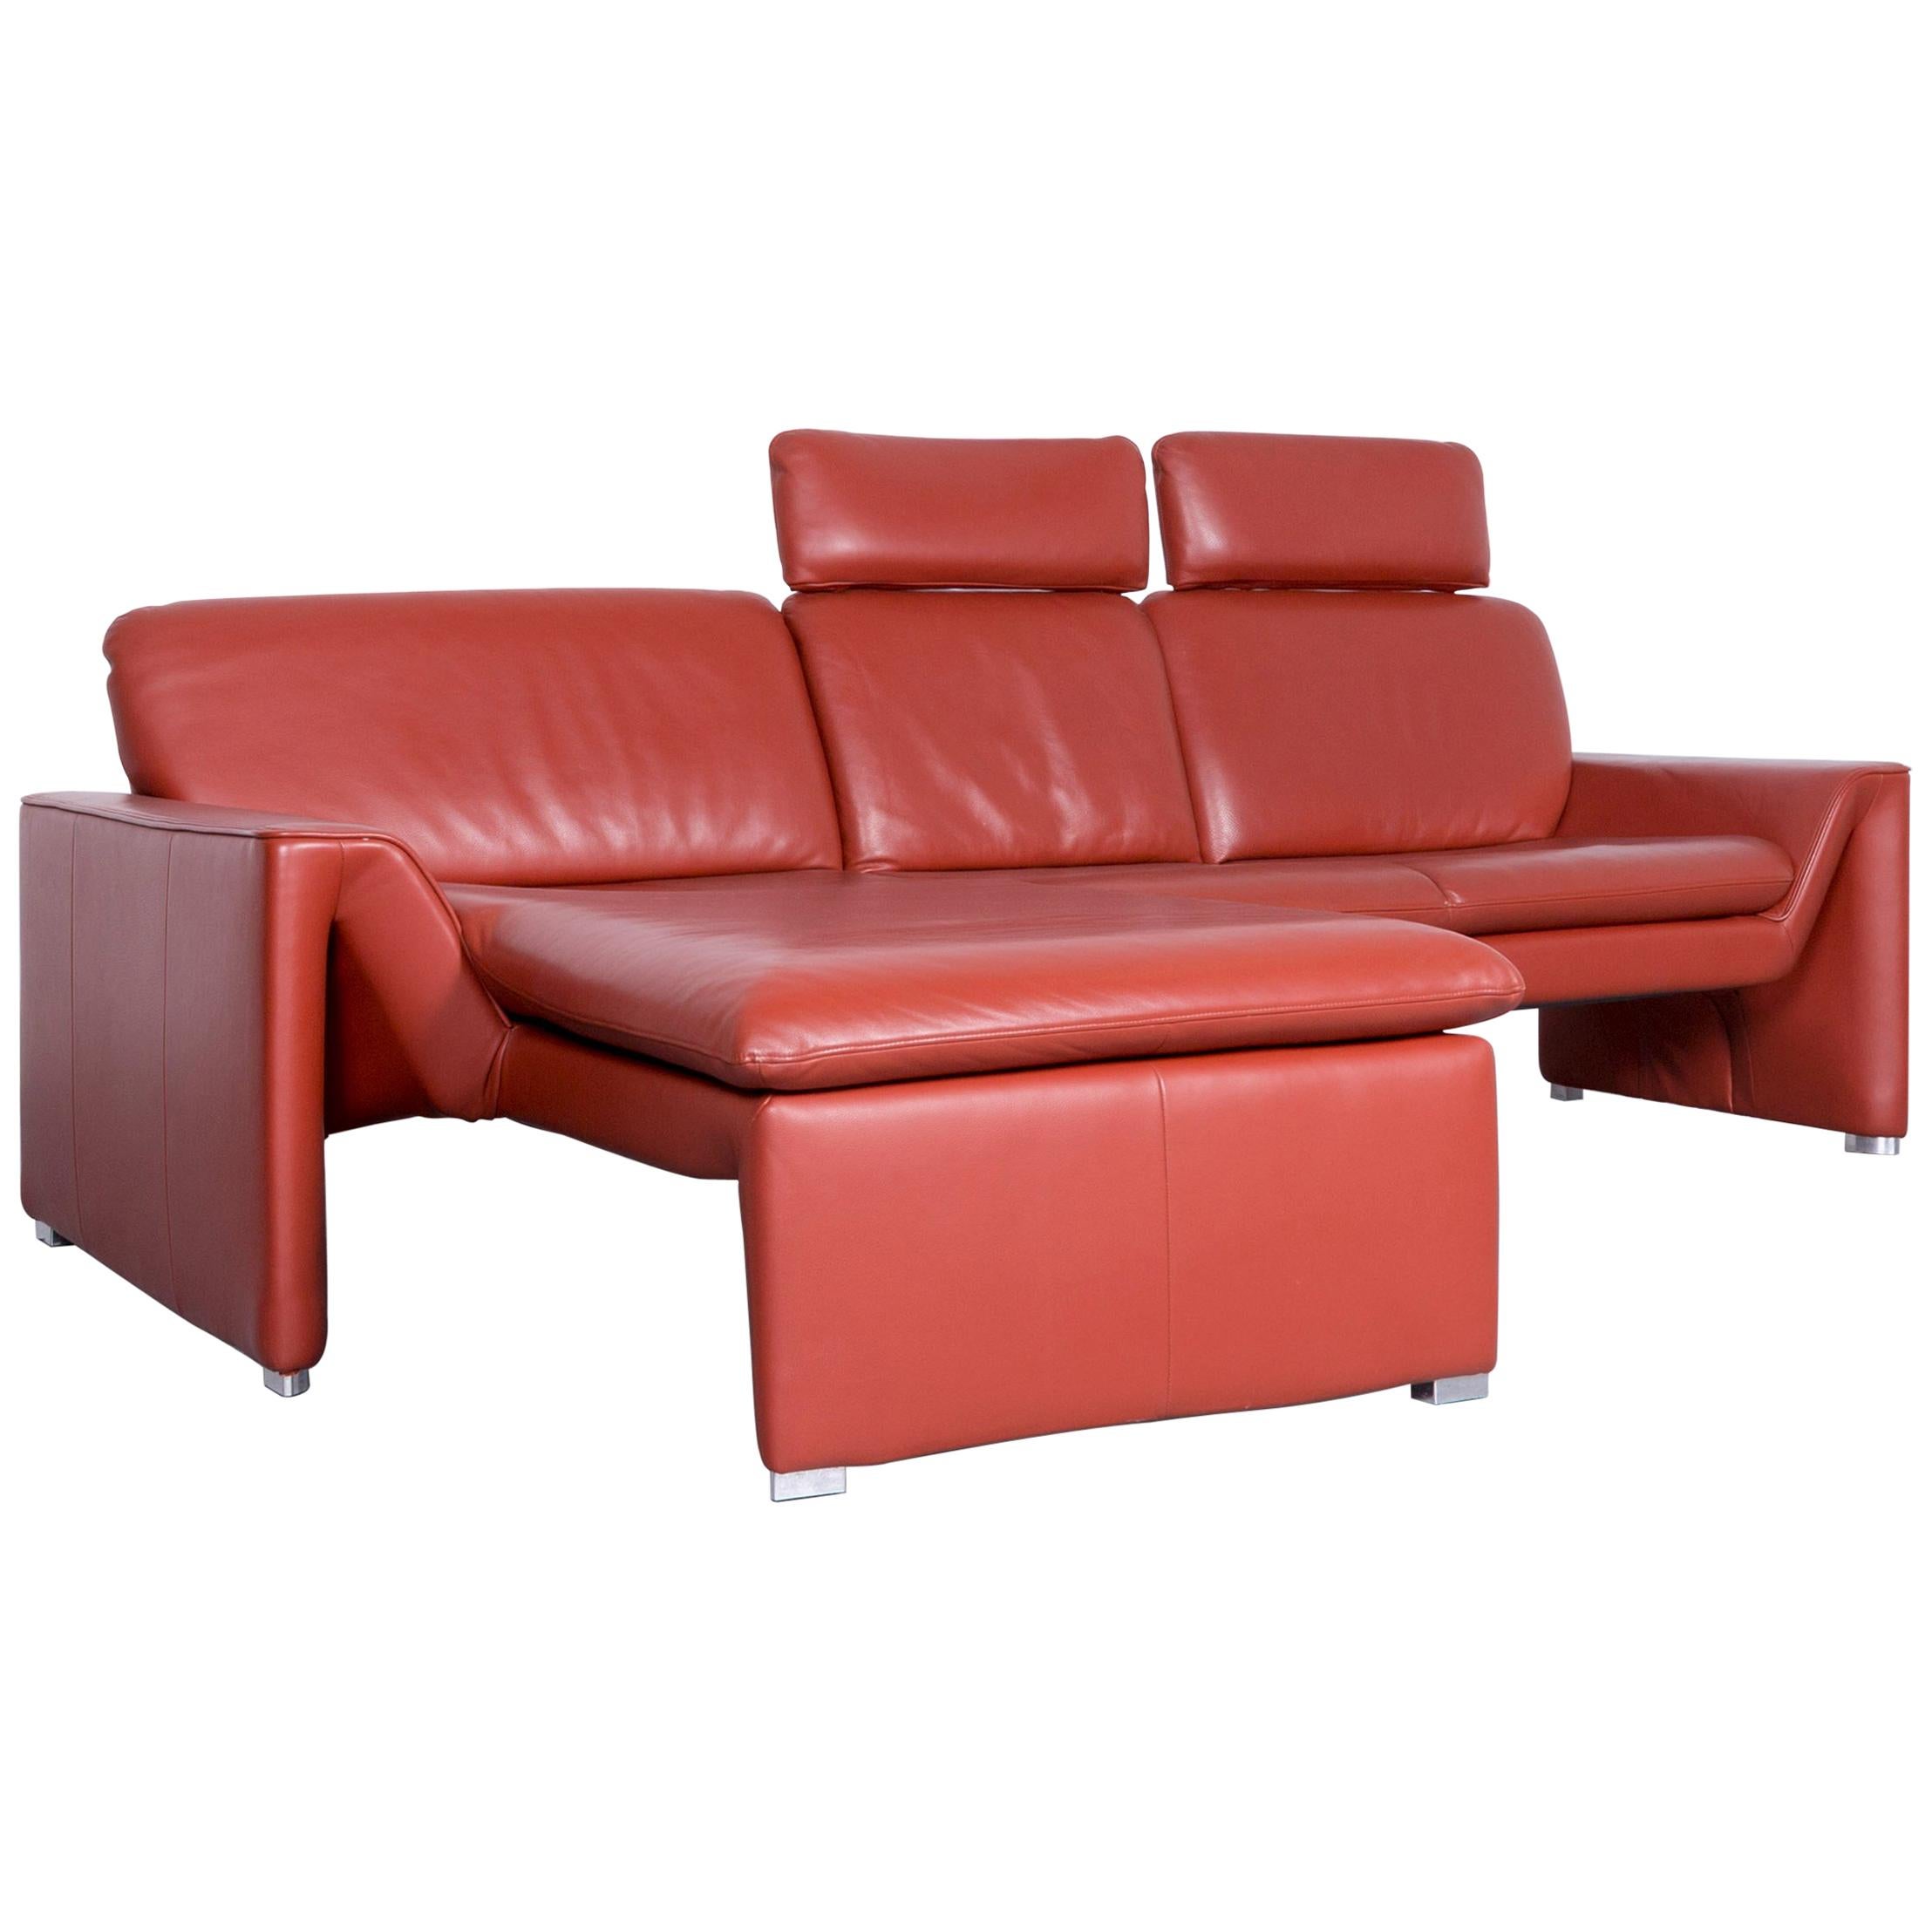 Laauser Corvus Designer Corner Sofa Leather Red Three-Seat Couch Modern